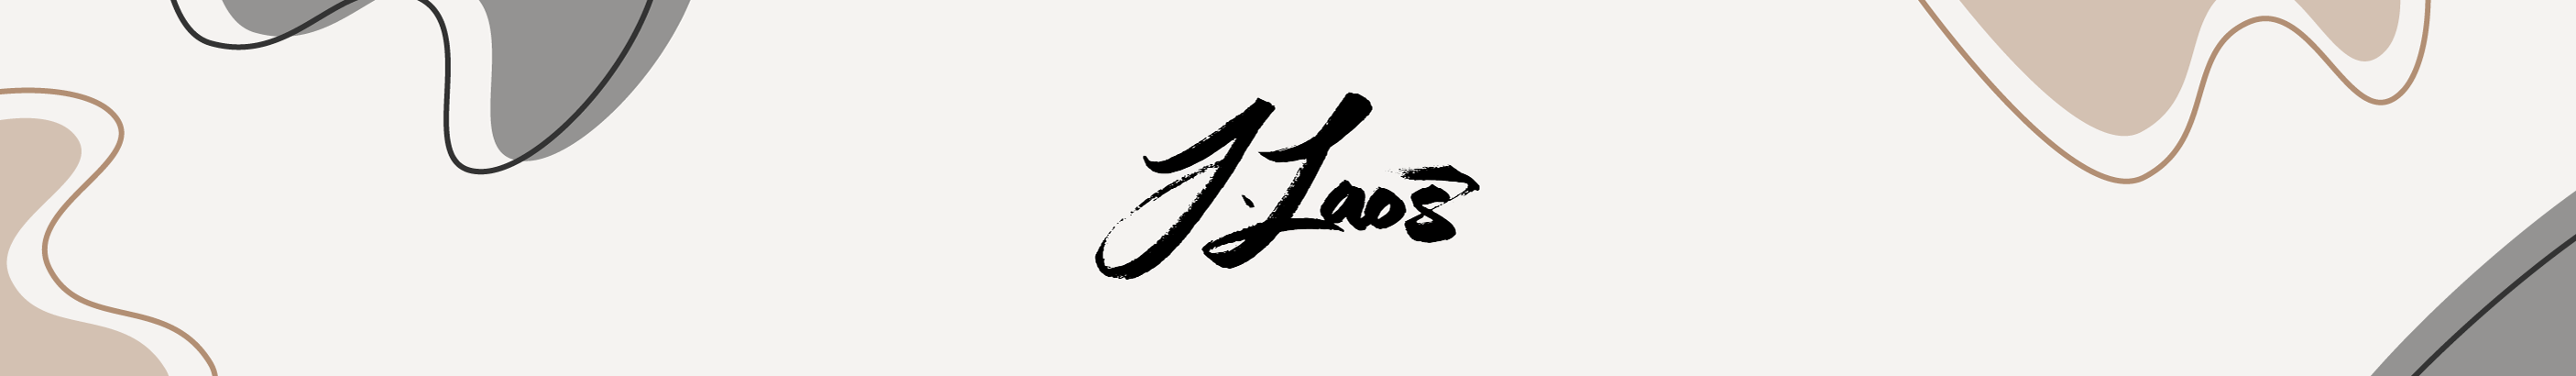 Johanna Laos's profile banner